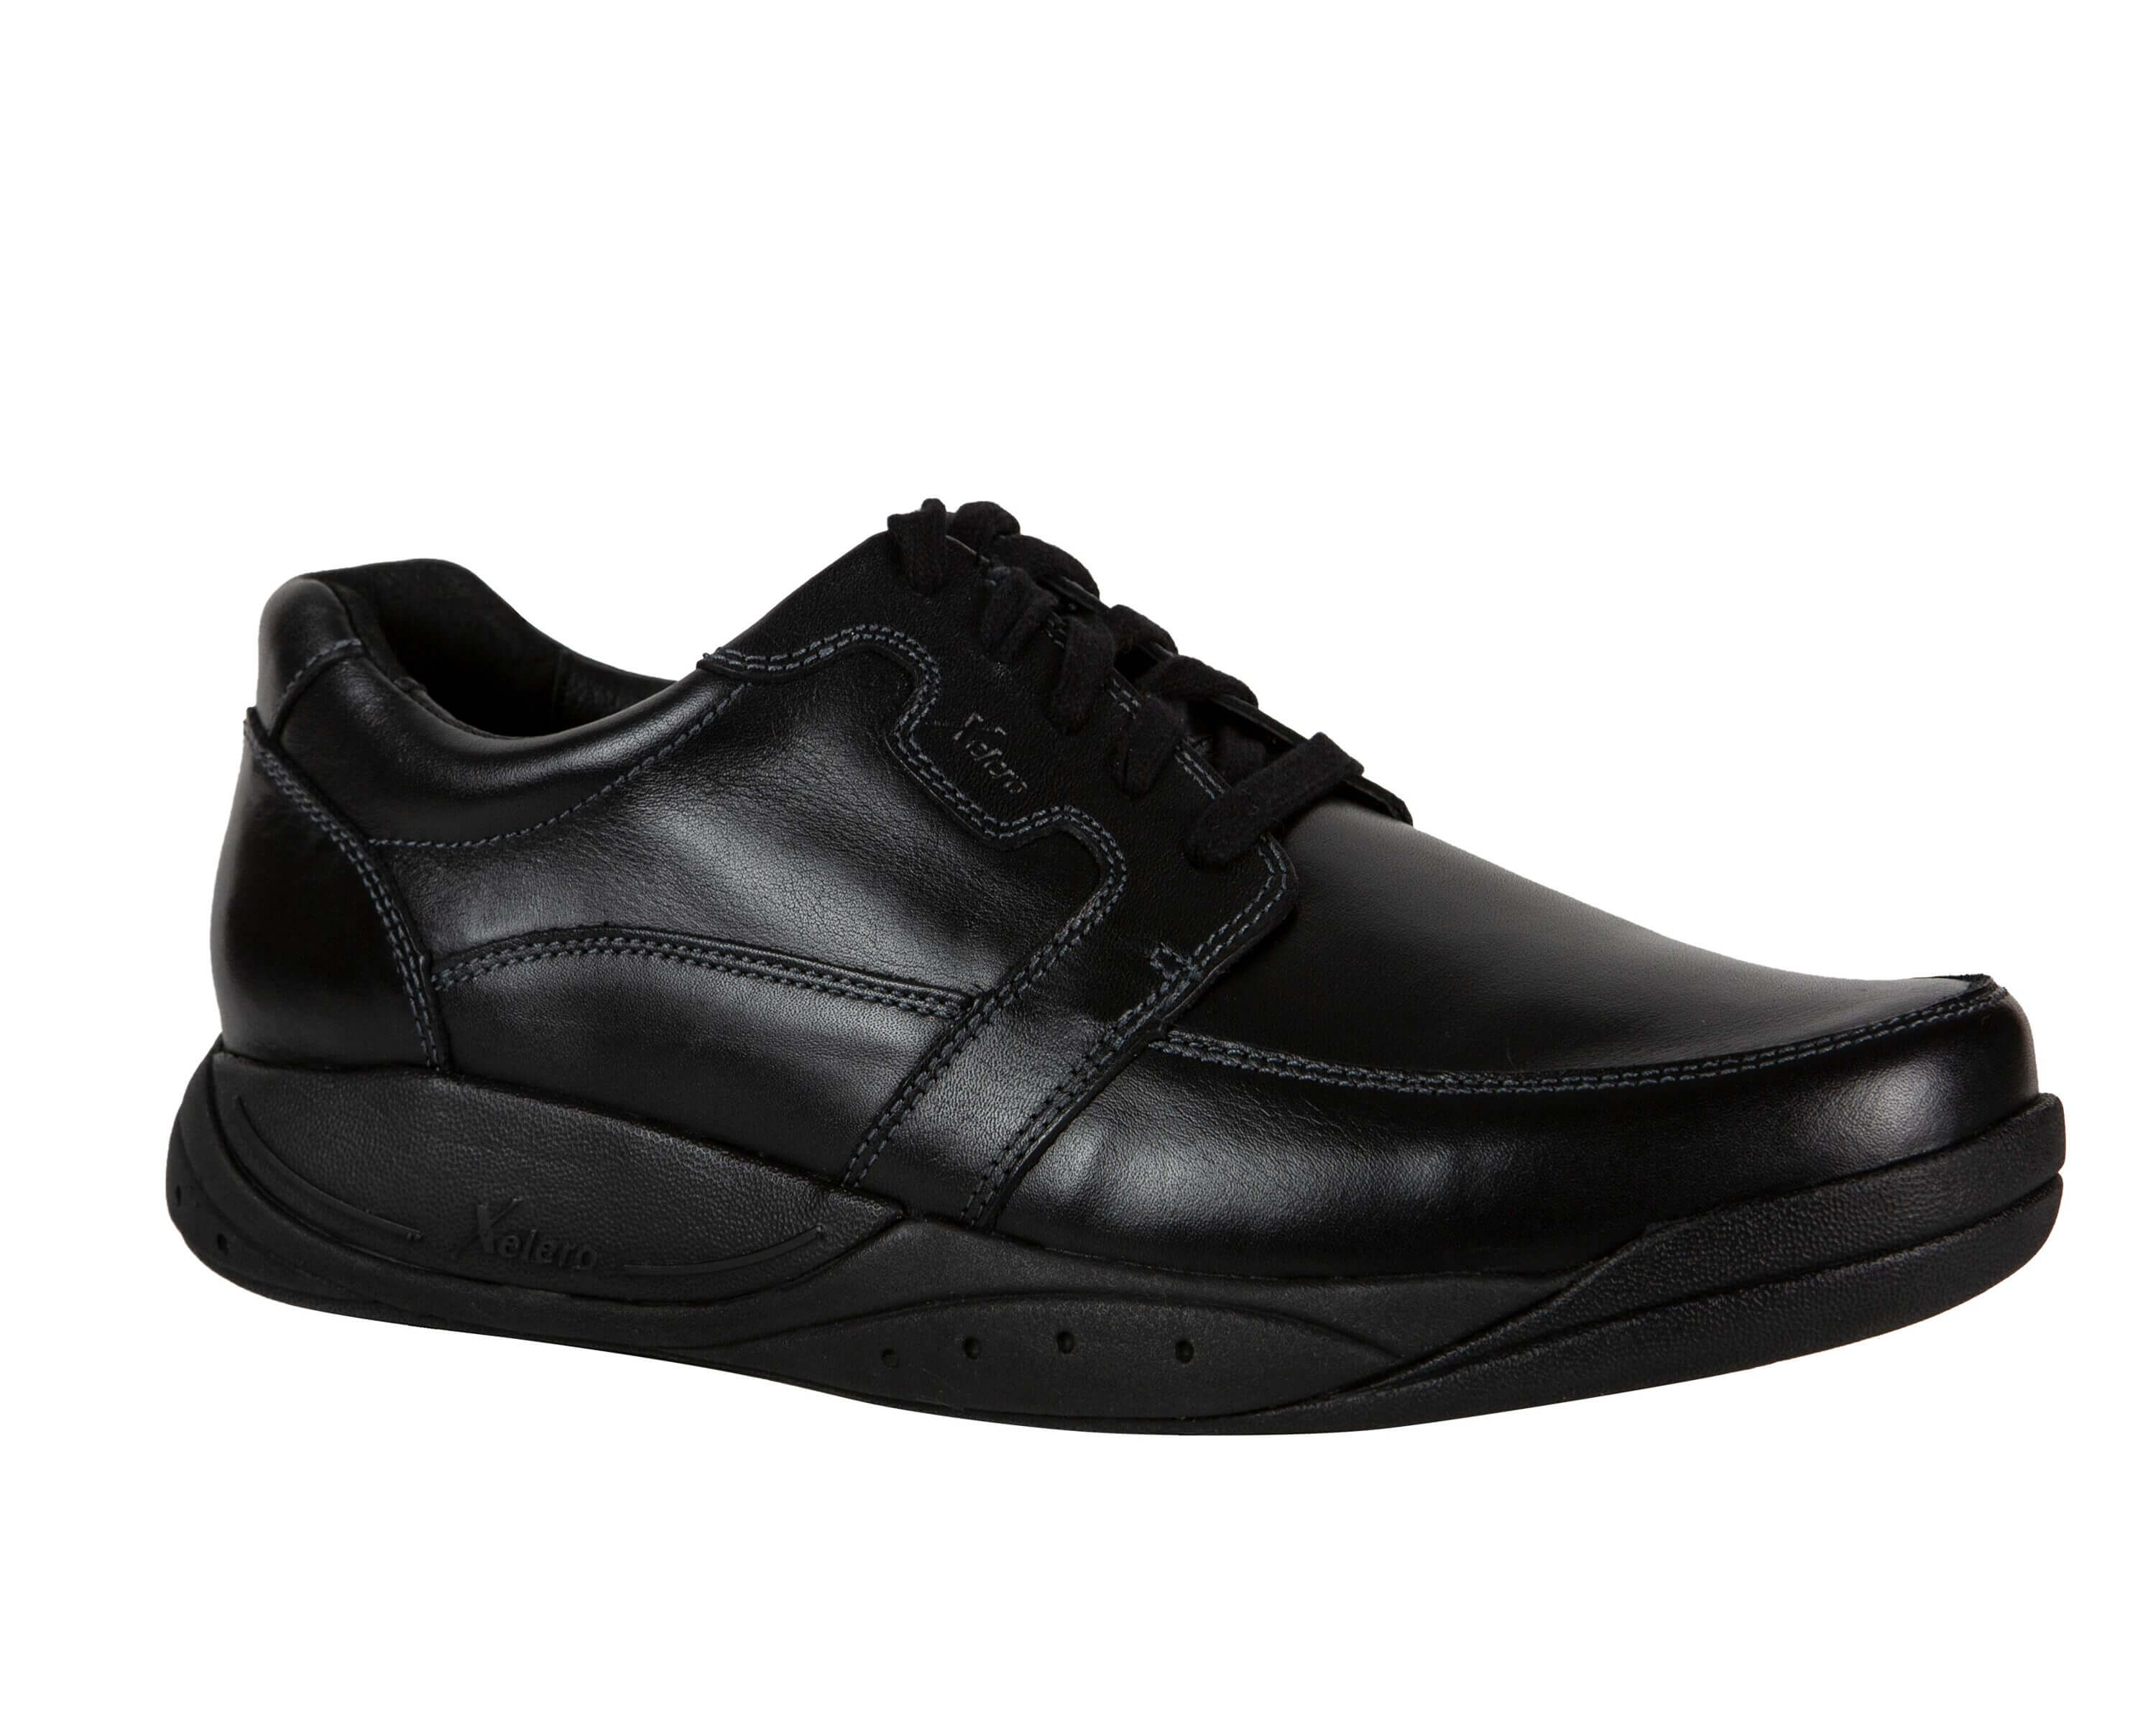 Xelero Shoes Stockholm X19600 - Men's Comfort Orthopedic Diabetic Shoe - Casual Shoe - Extra Depth For Orthotics